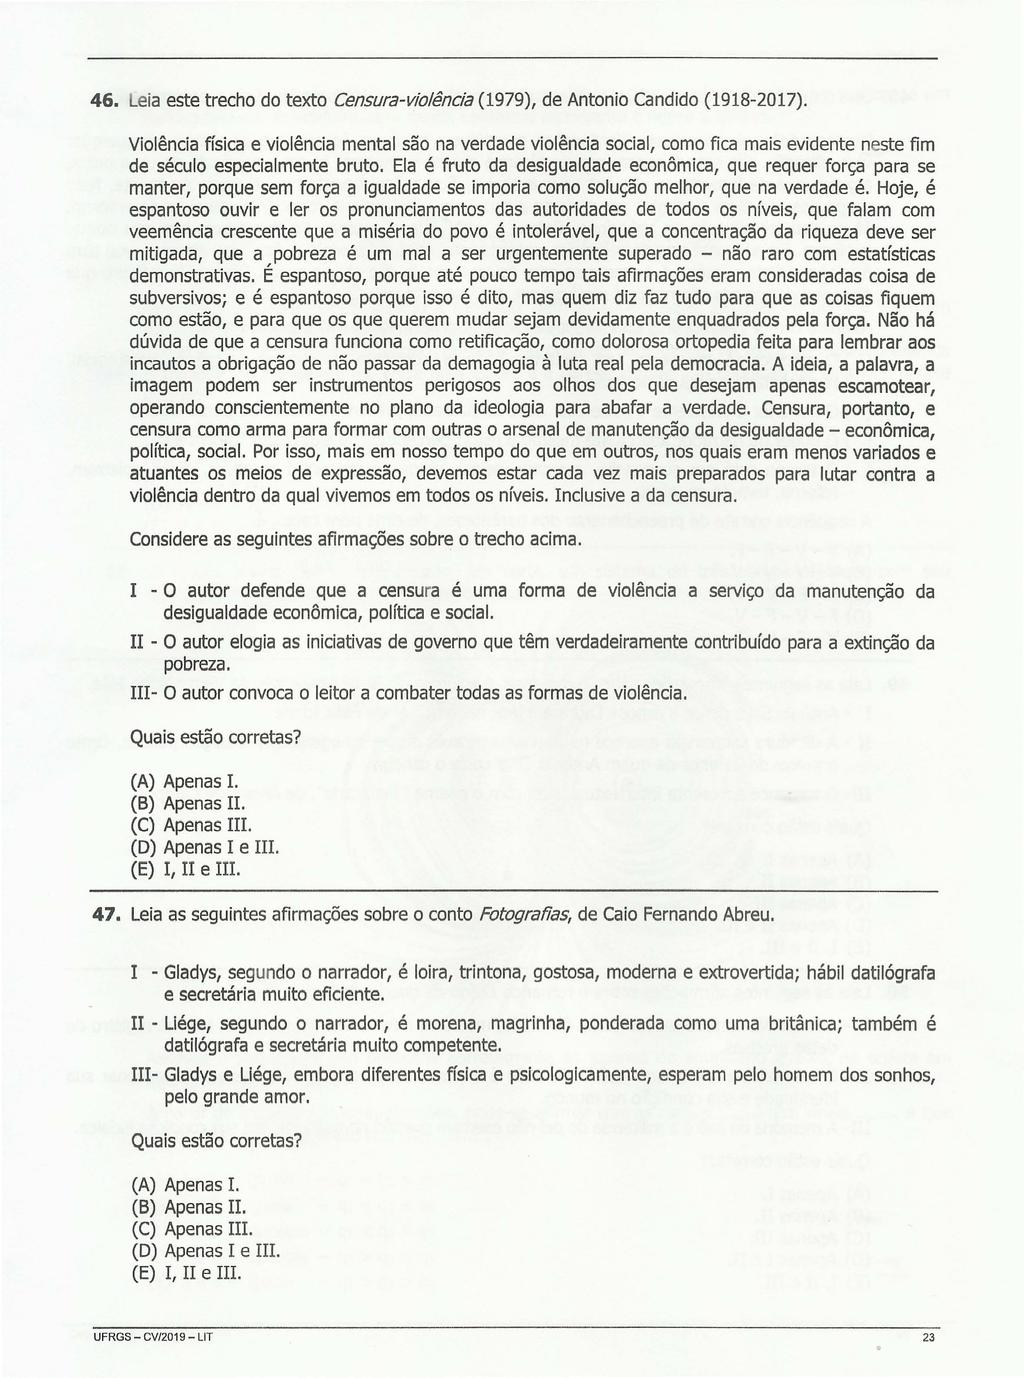 46. Leia este trecho do texto Censura-violência (1979), de Antonio Candido (1918-2017).